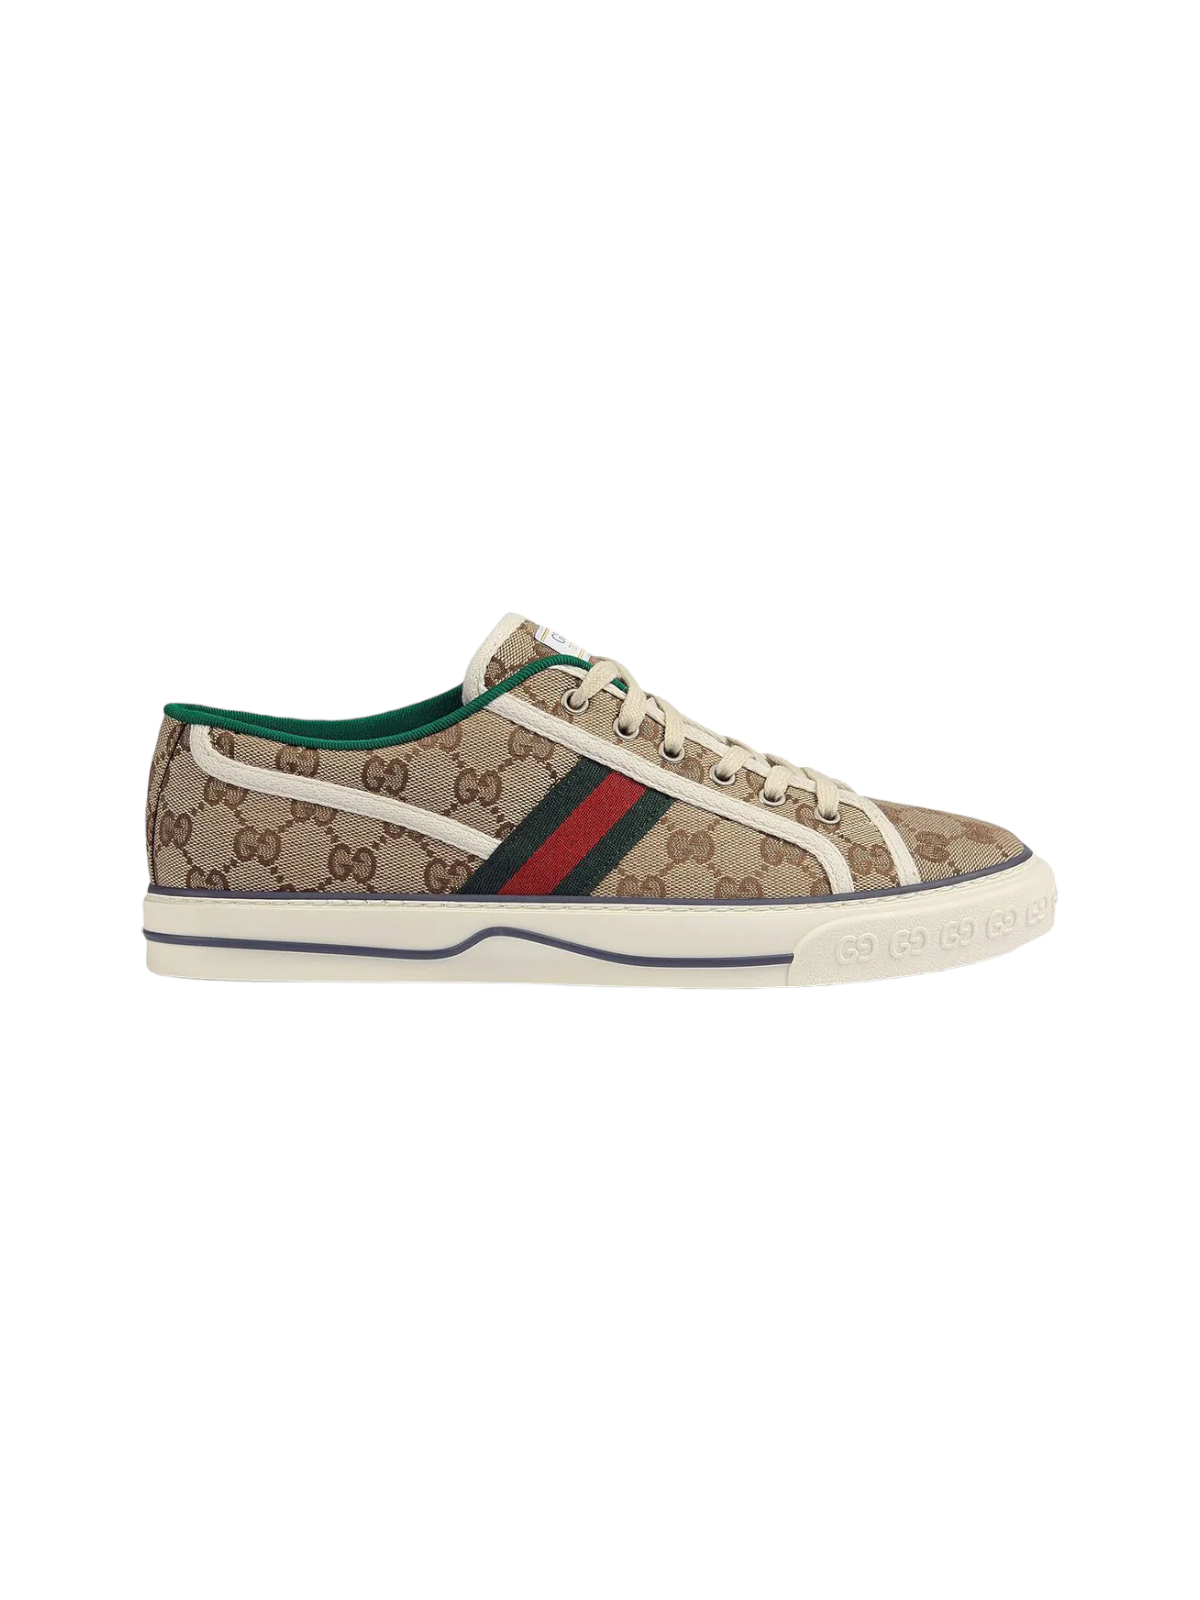 Gucci x Disney Tennis 1977 Sneakers